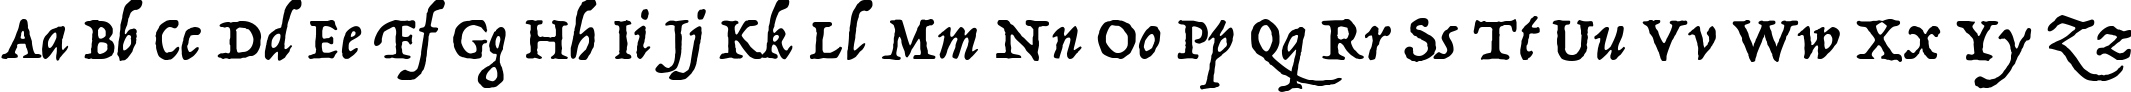 Пример написания английского алфавита шрифтом P22 Operina Romano